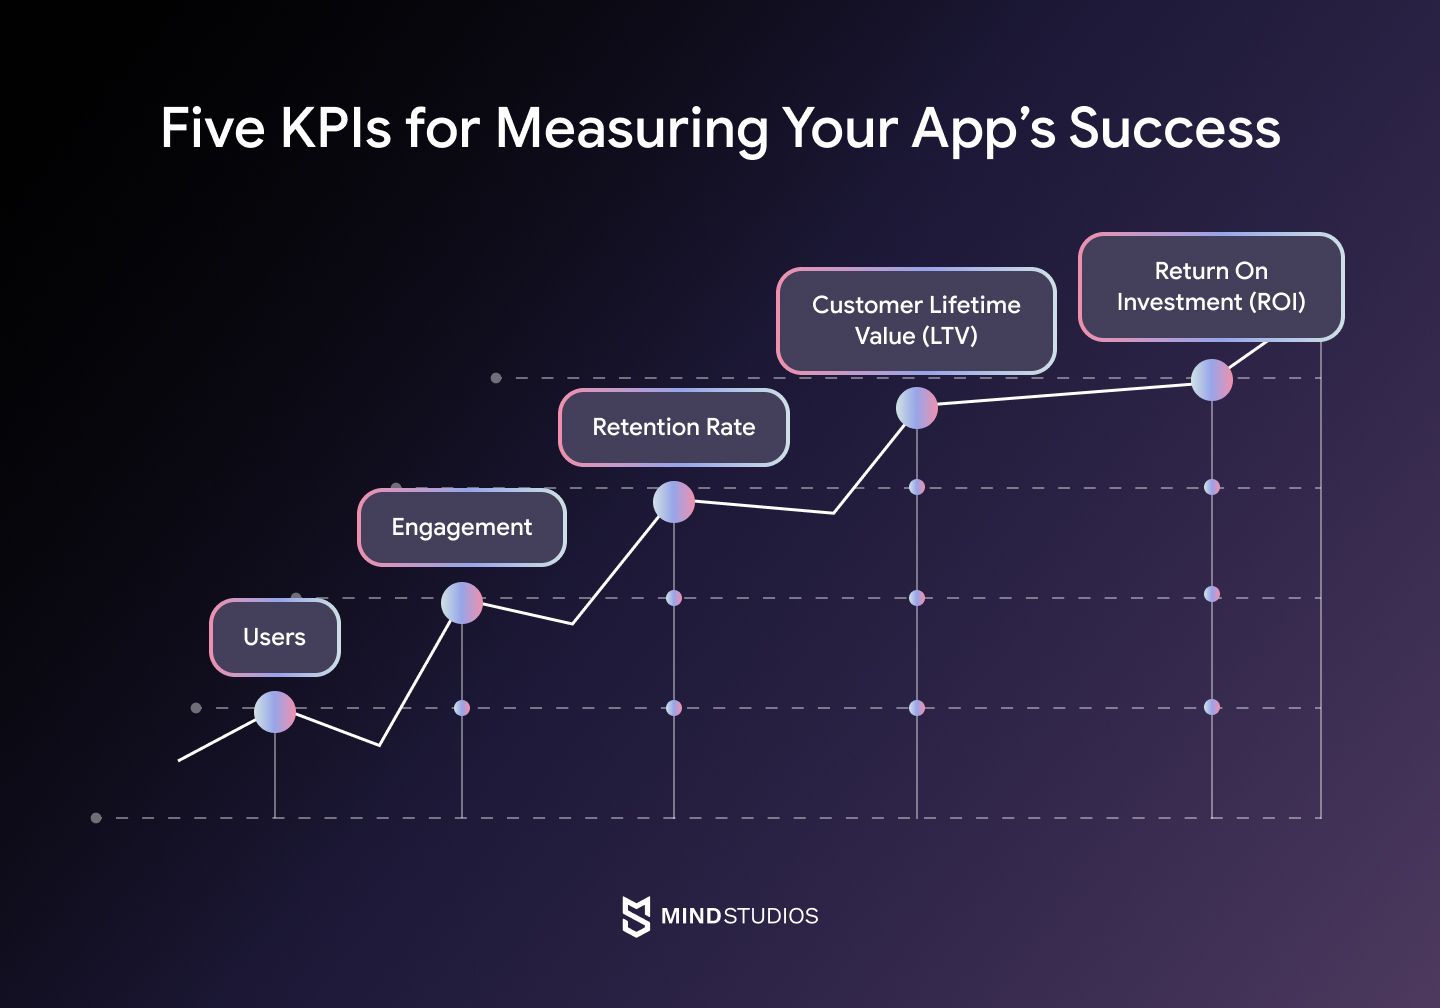 Five KPIs for measuring your app’s success